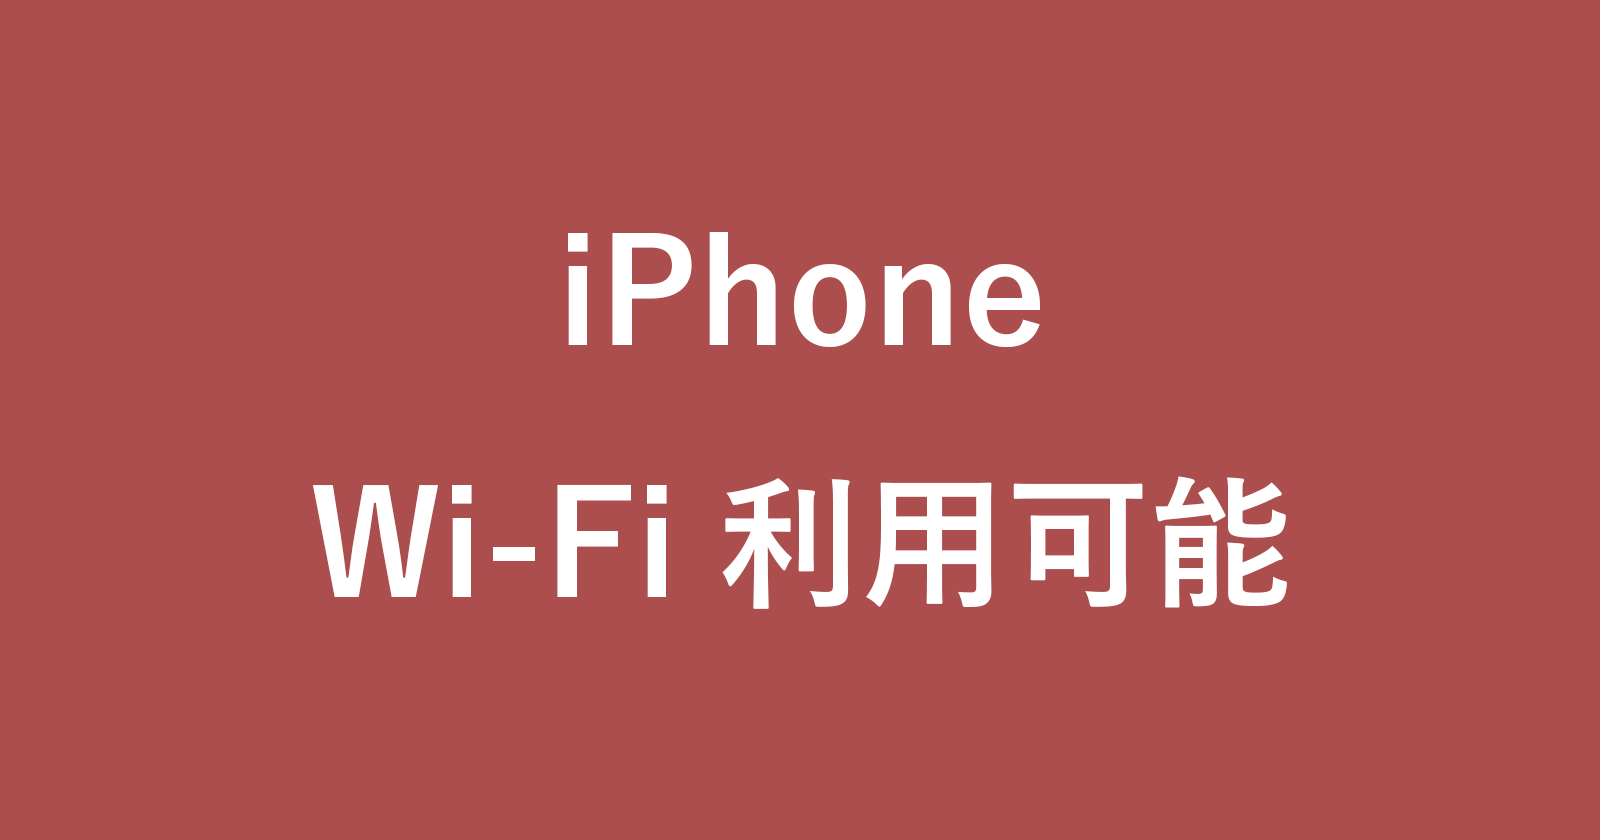 iphone wi fi notification